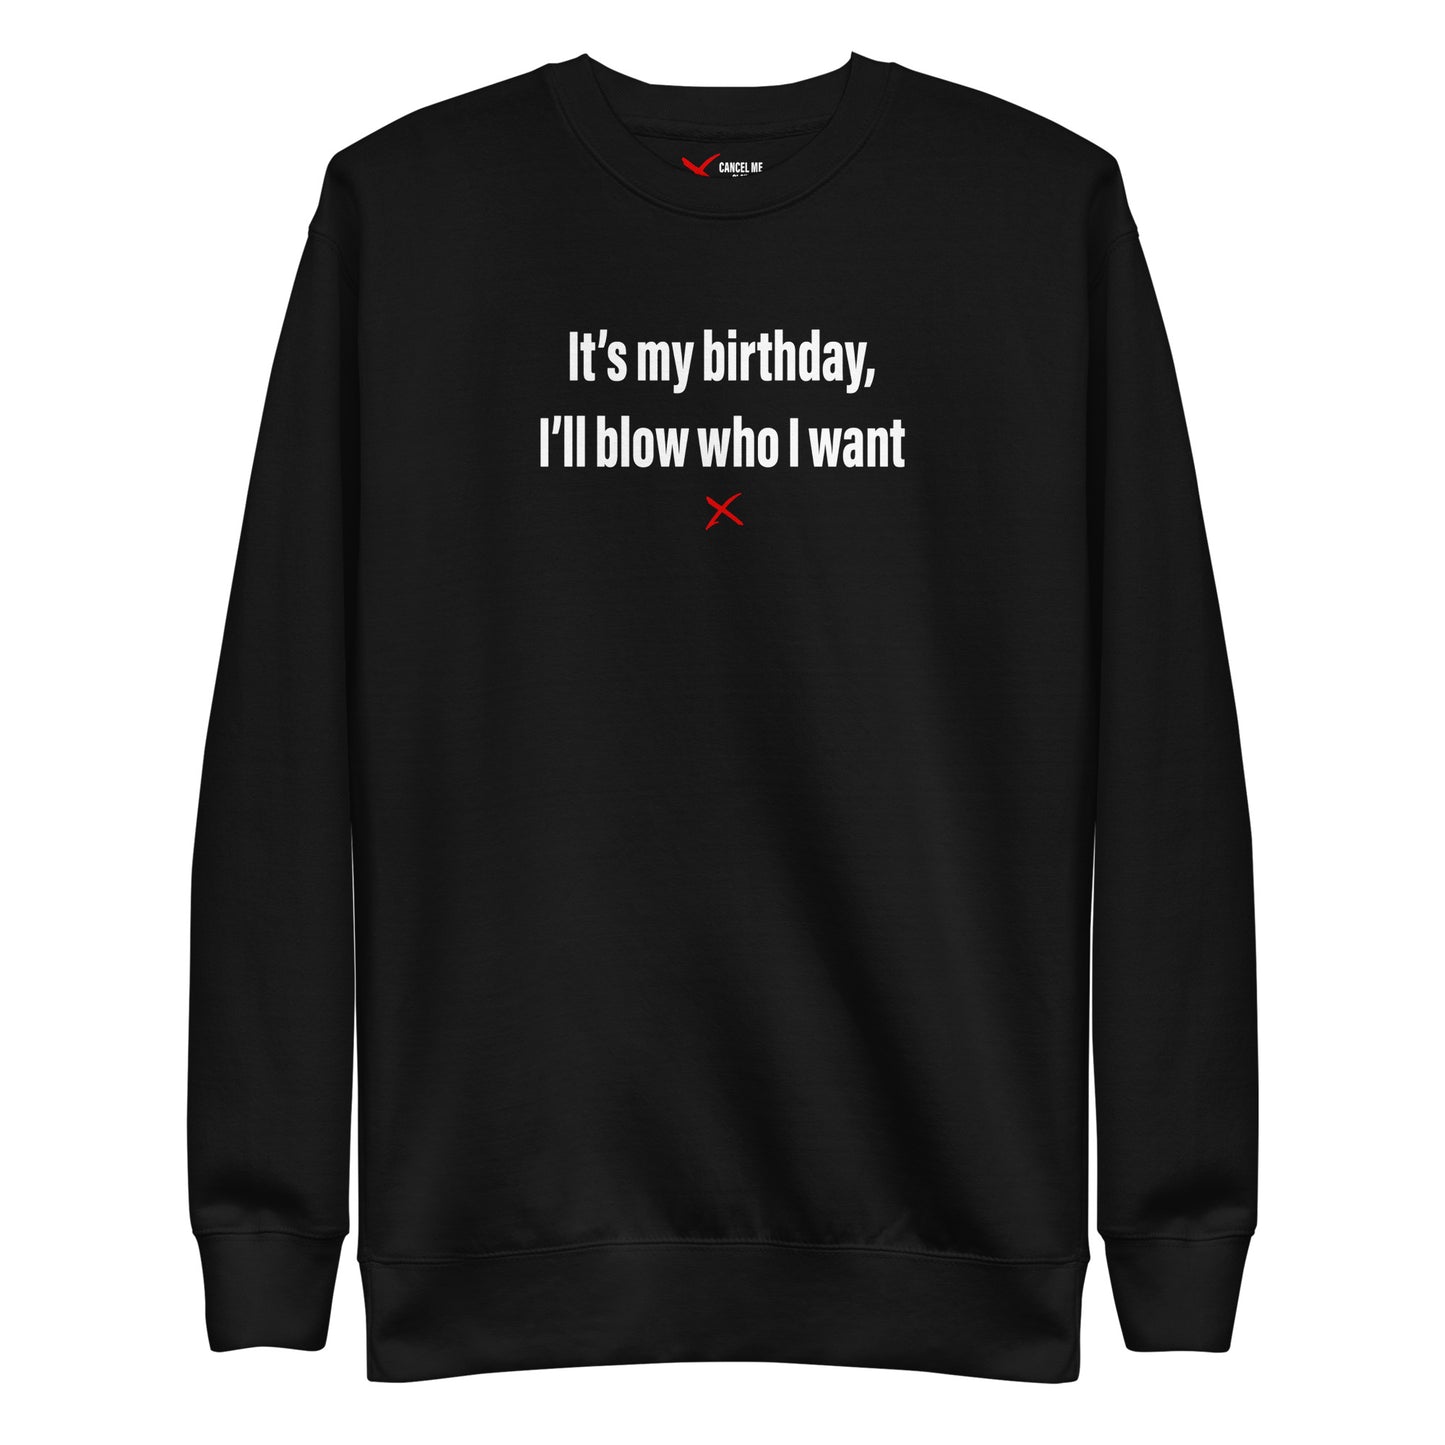 It's my birthday, I'll blow who I want - Sweatshirt